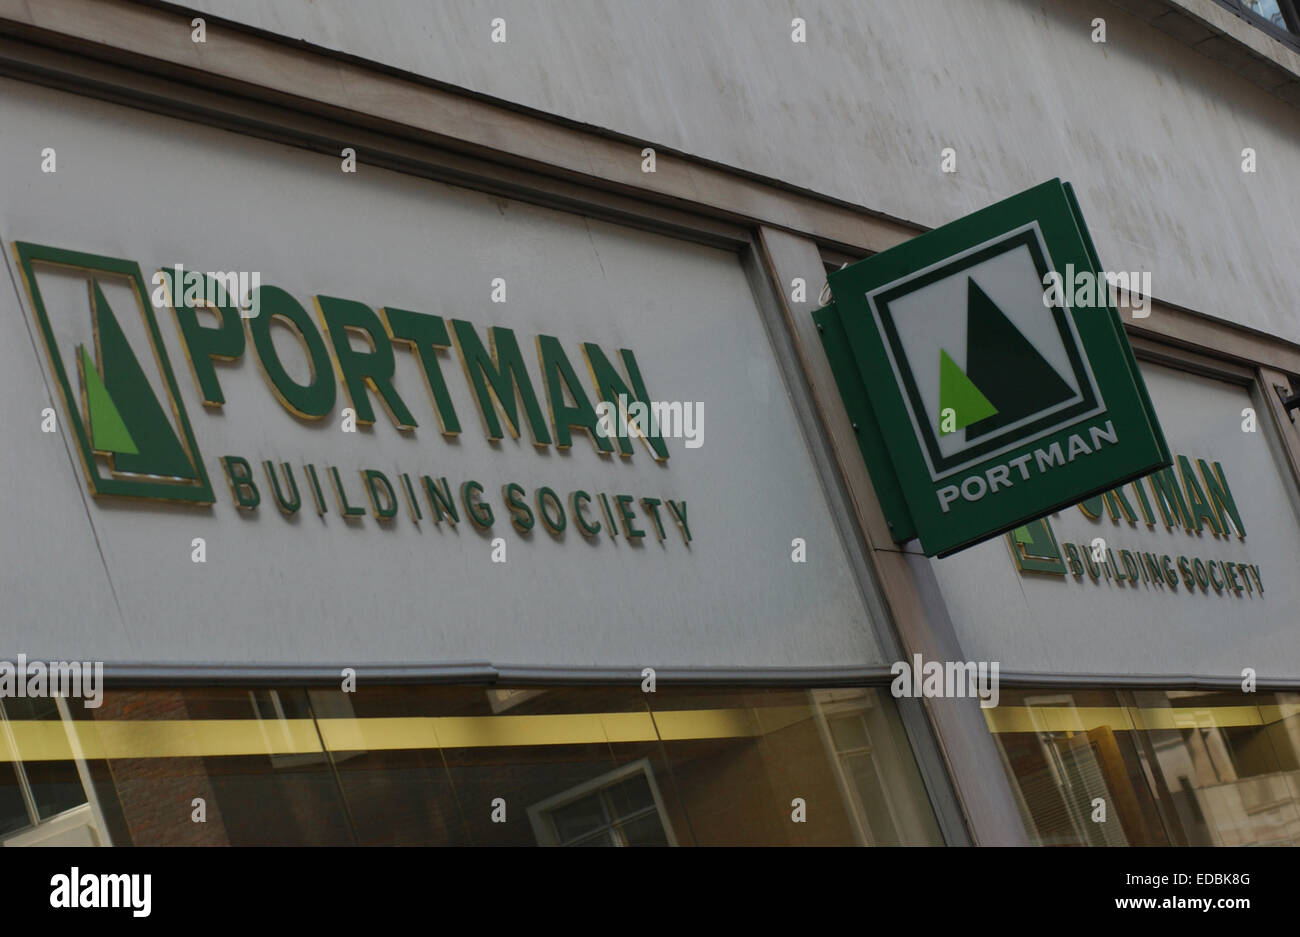 Exterior of a Portman building Society branch Stock Photo